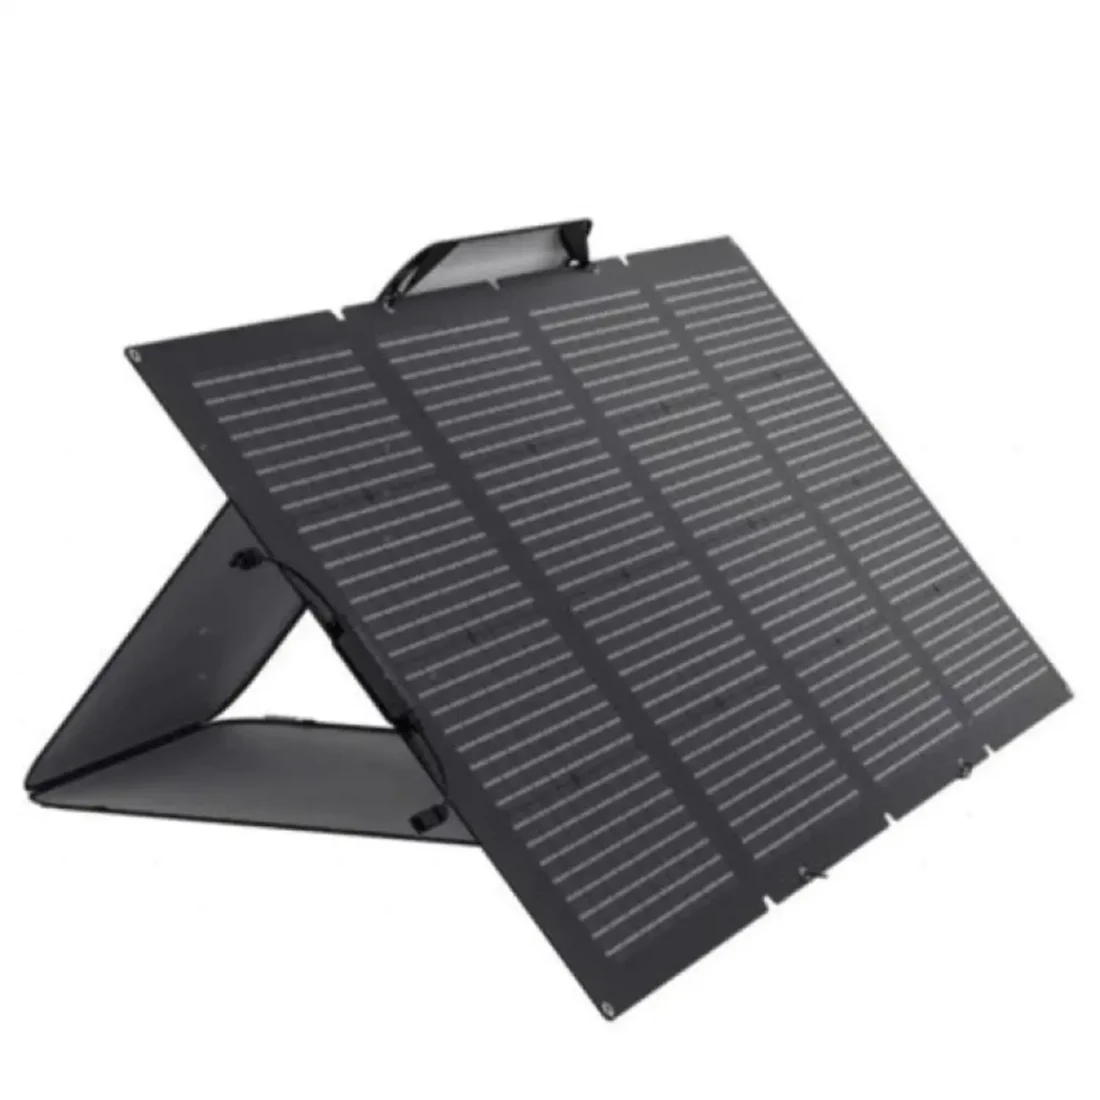 EcoFlow DELTA 2 With Extra Battery 2048Wh 1800W Solar Generator + 200W  Portable Monocrystalline Solar Panels